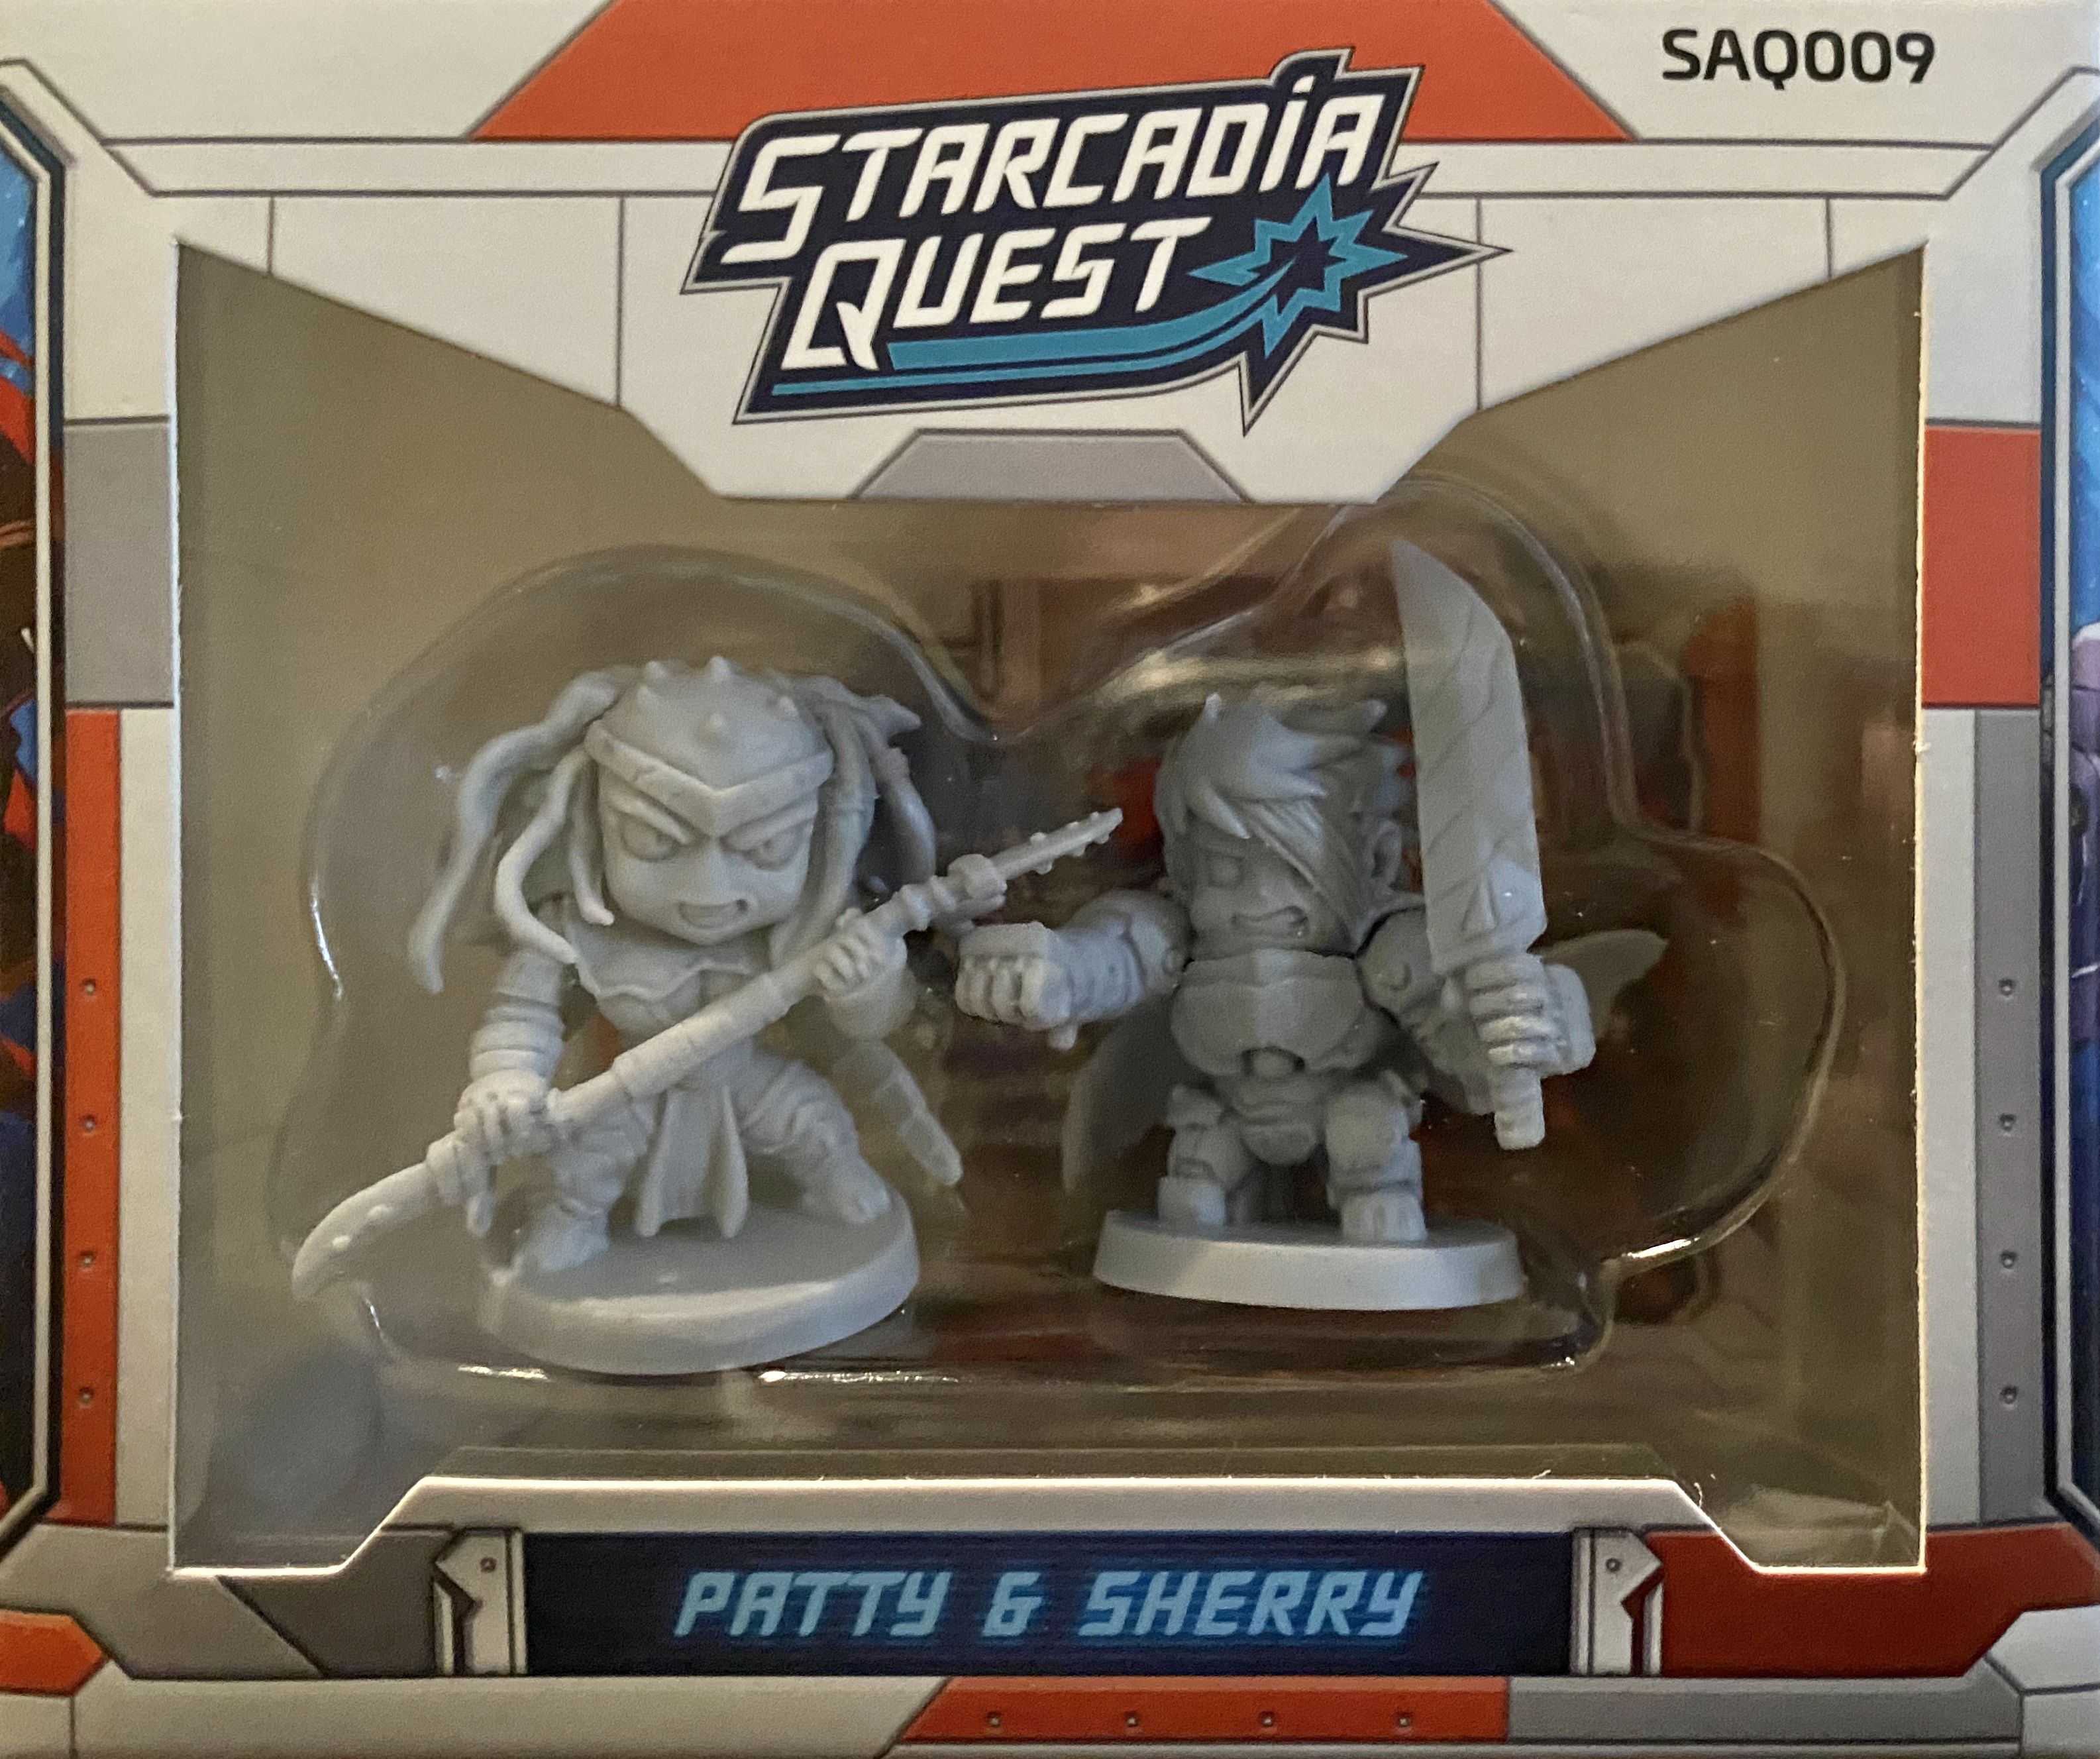 Starcadia Quest: Patty & Sherry